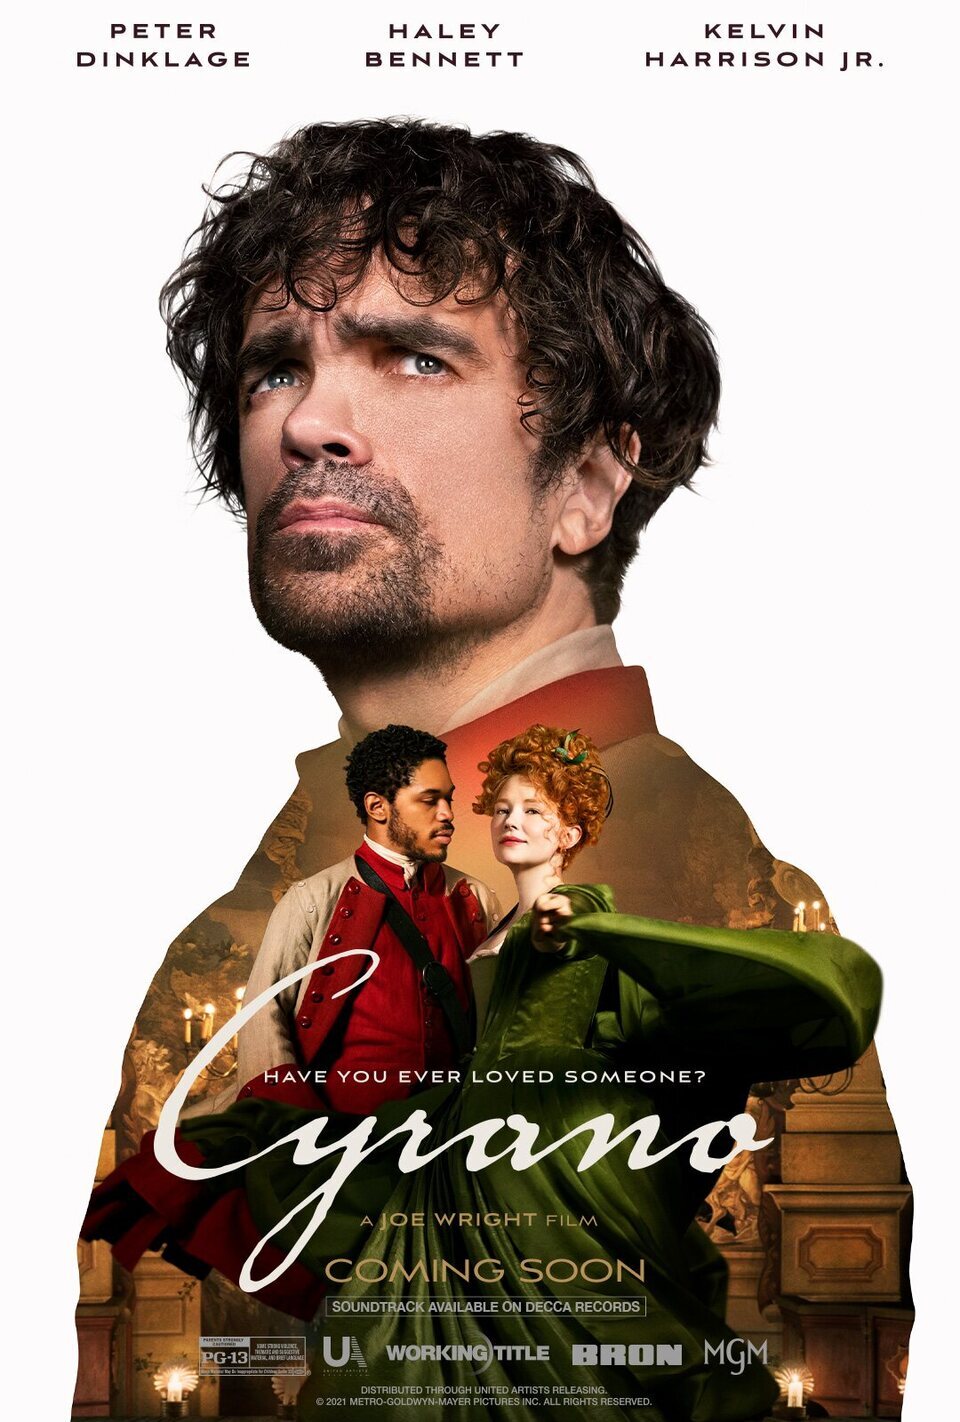 Reino Unido poster for Cyrano